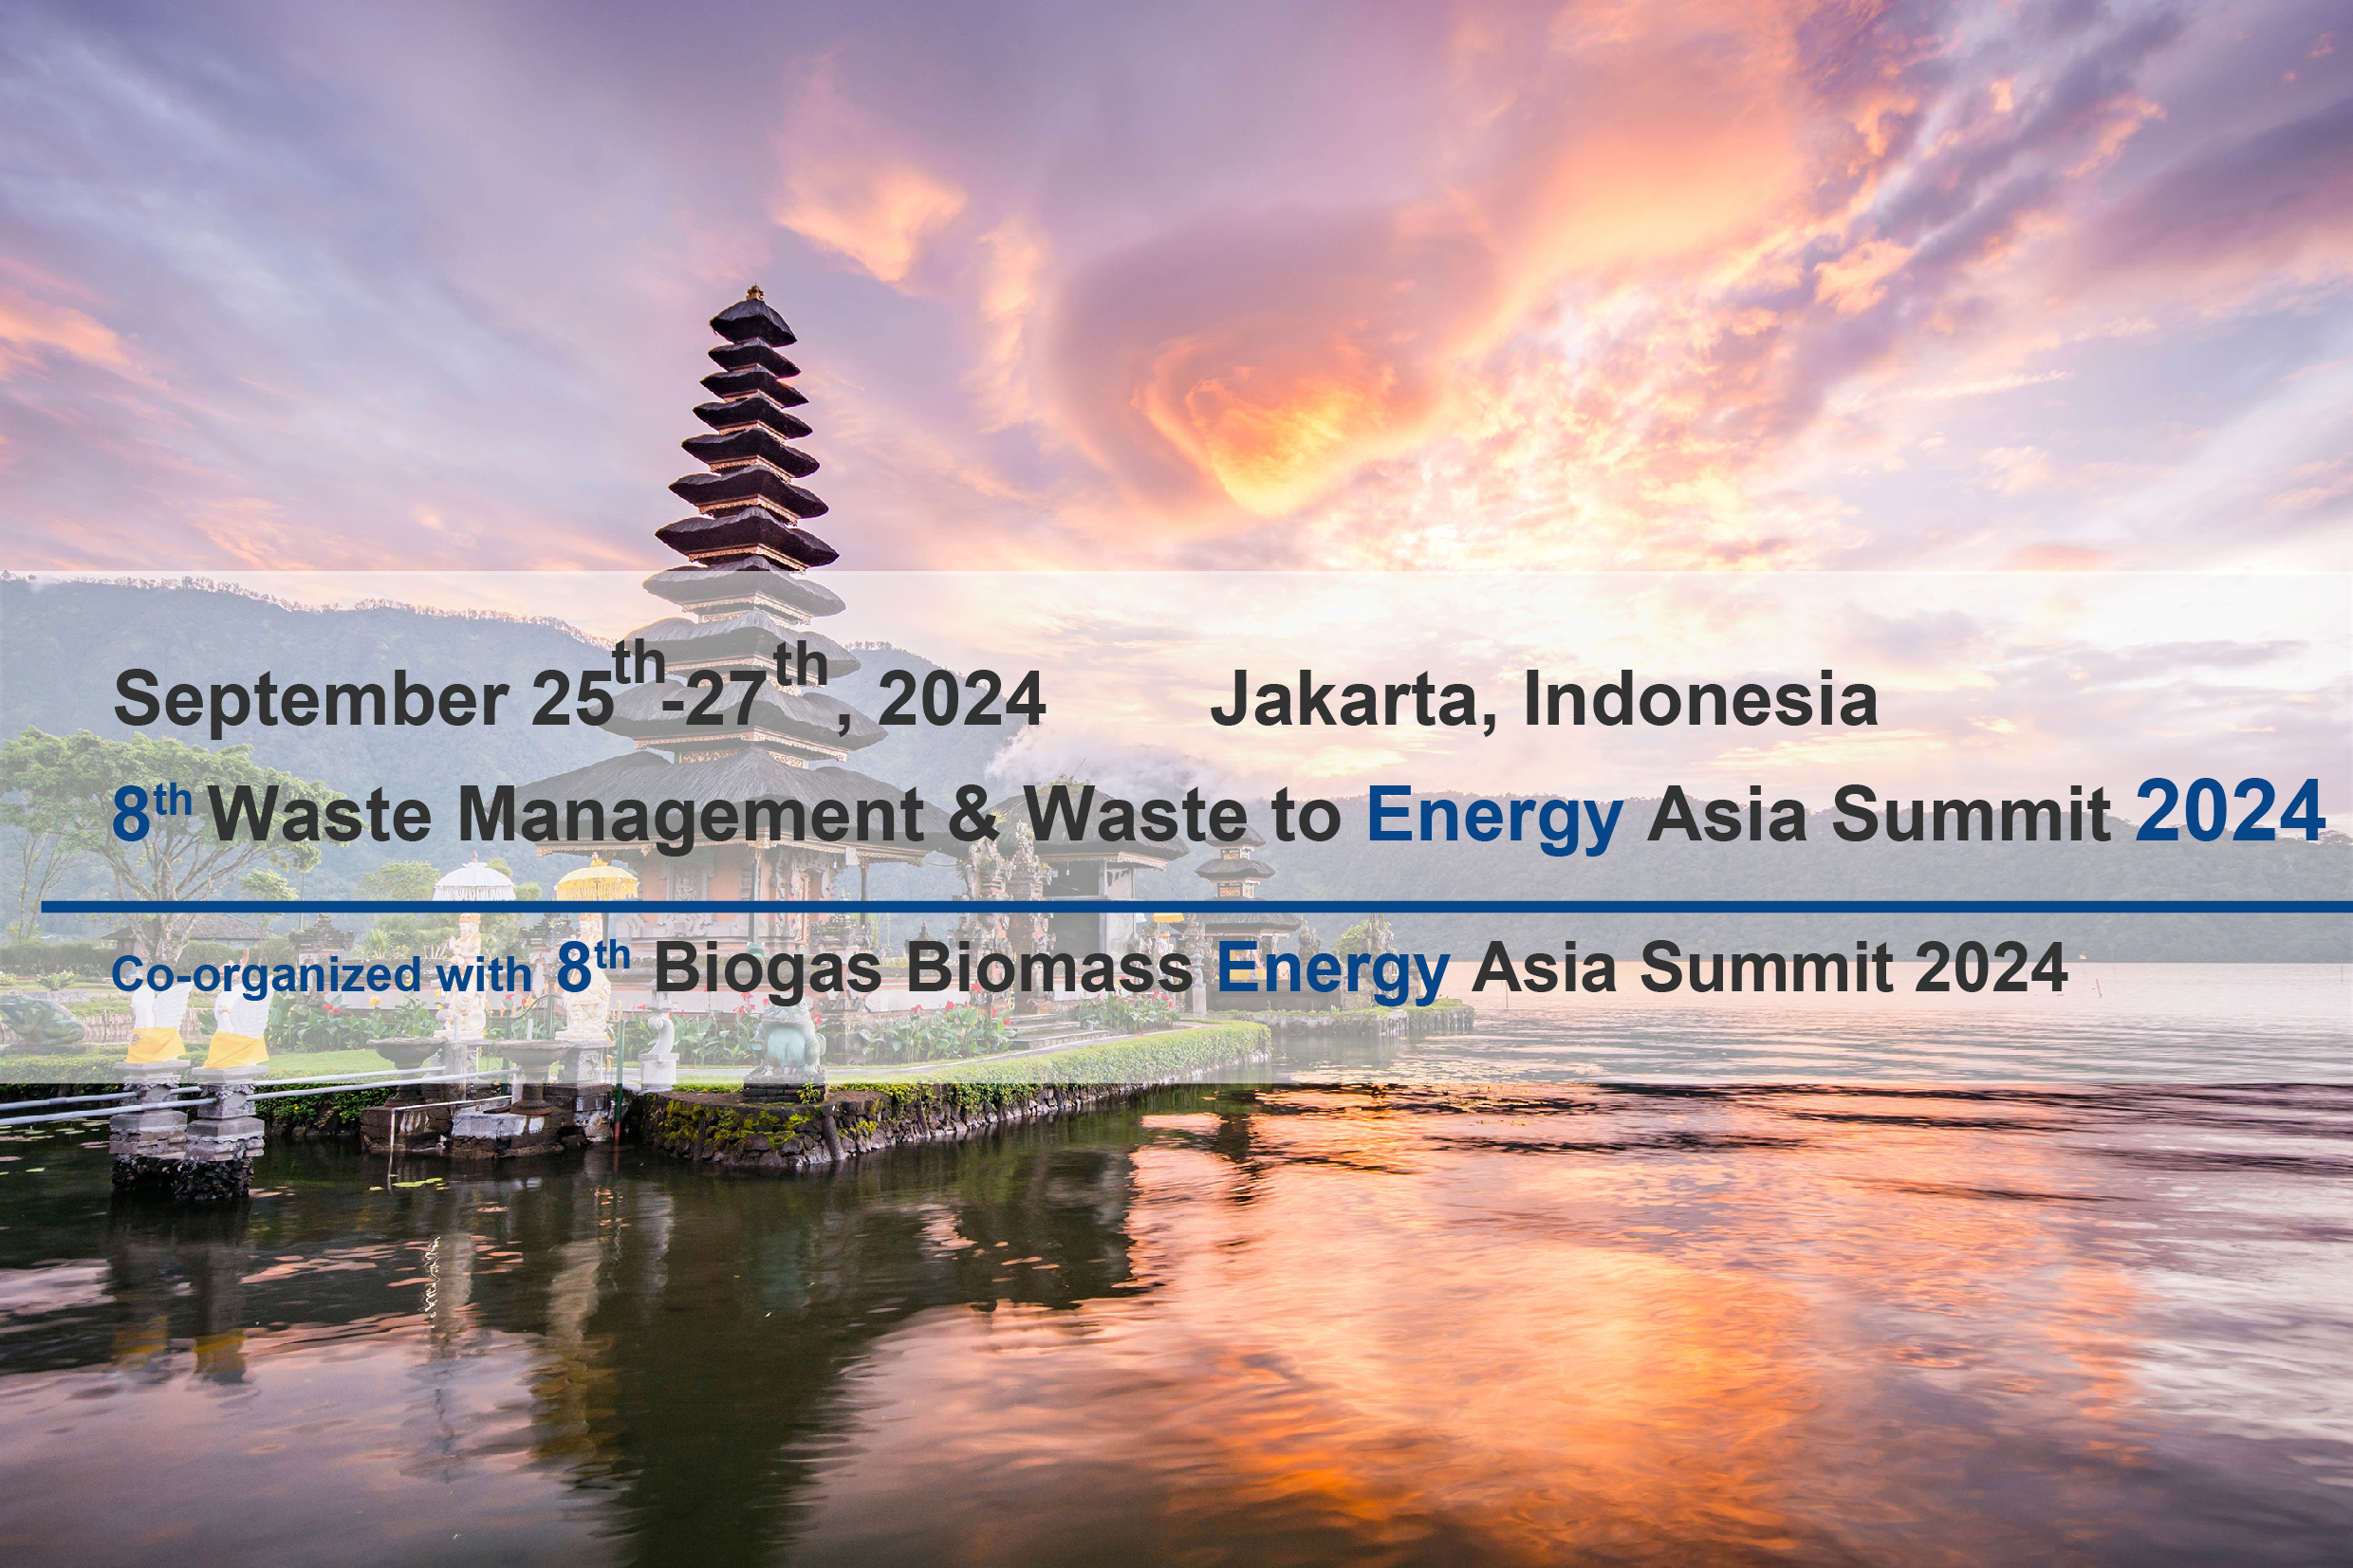 Waste to Energy Asia Summit 2024 Indonesia Focus